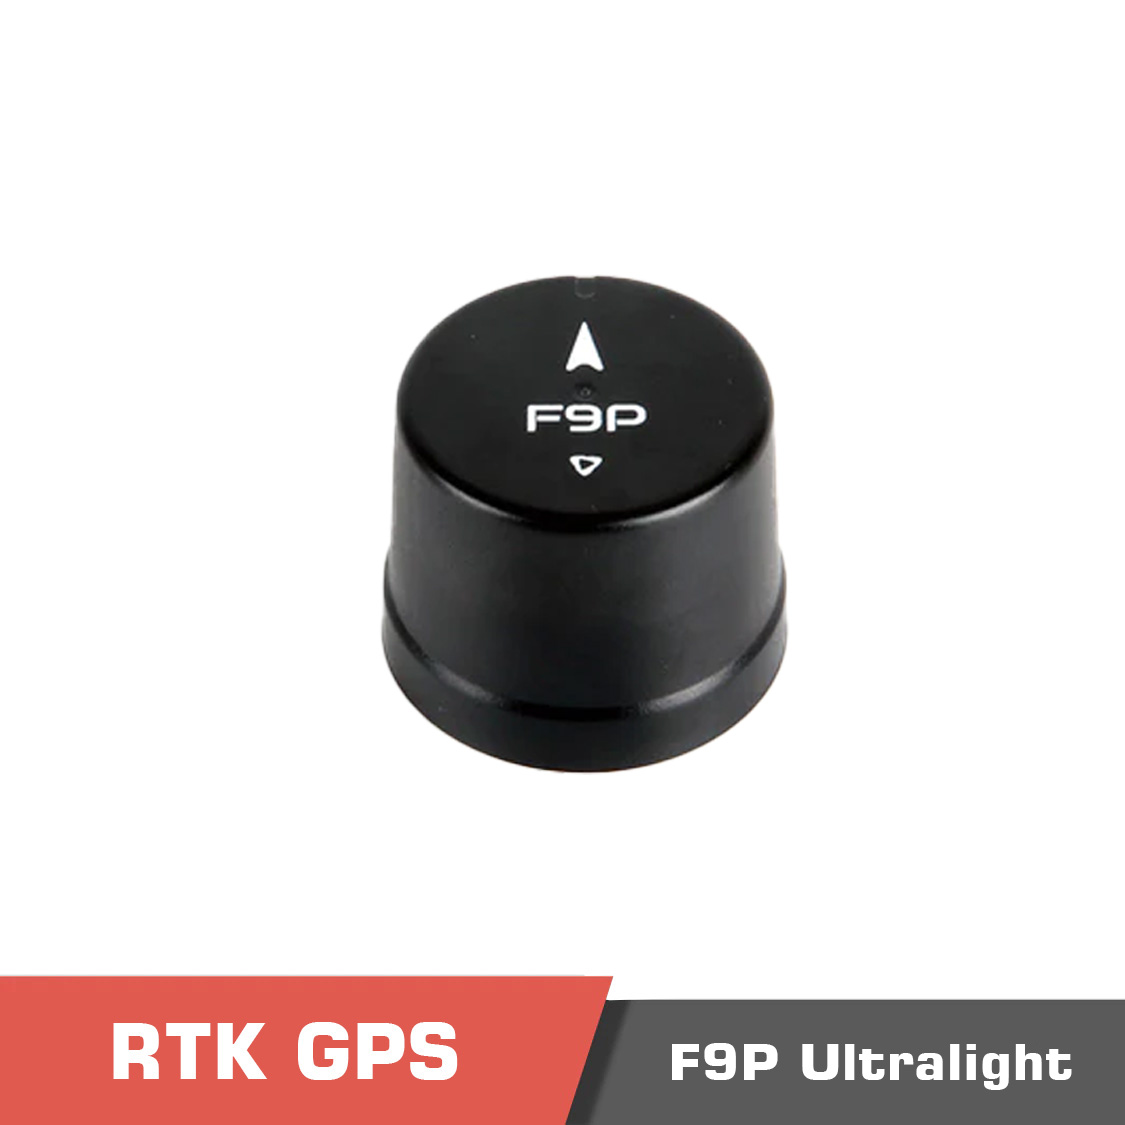 F9p ulrta light temp. 3 - speedybee f405 v3, speedybee f405 v3 bls 50a 30x30 stack, autopilot, esc, f405, bec, pwm control - motionew - 1